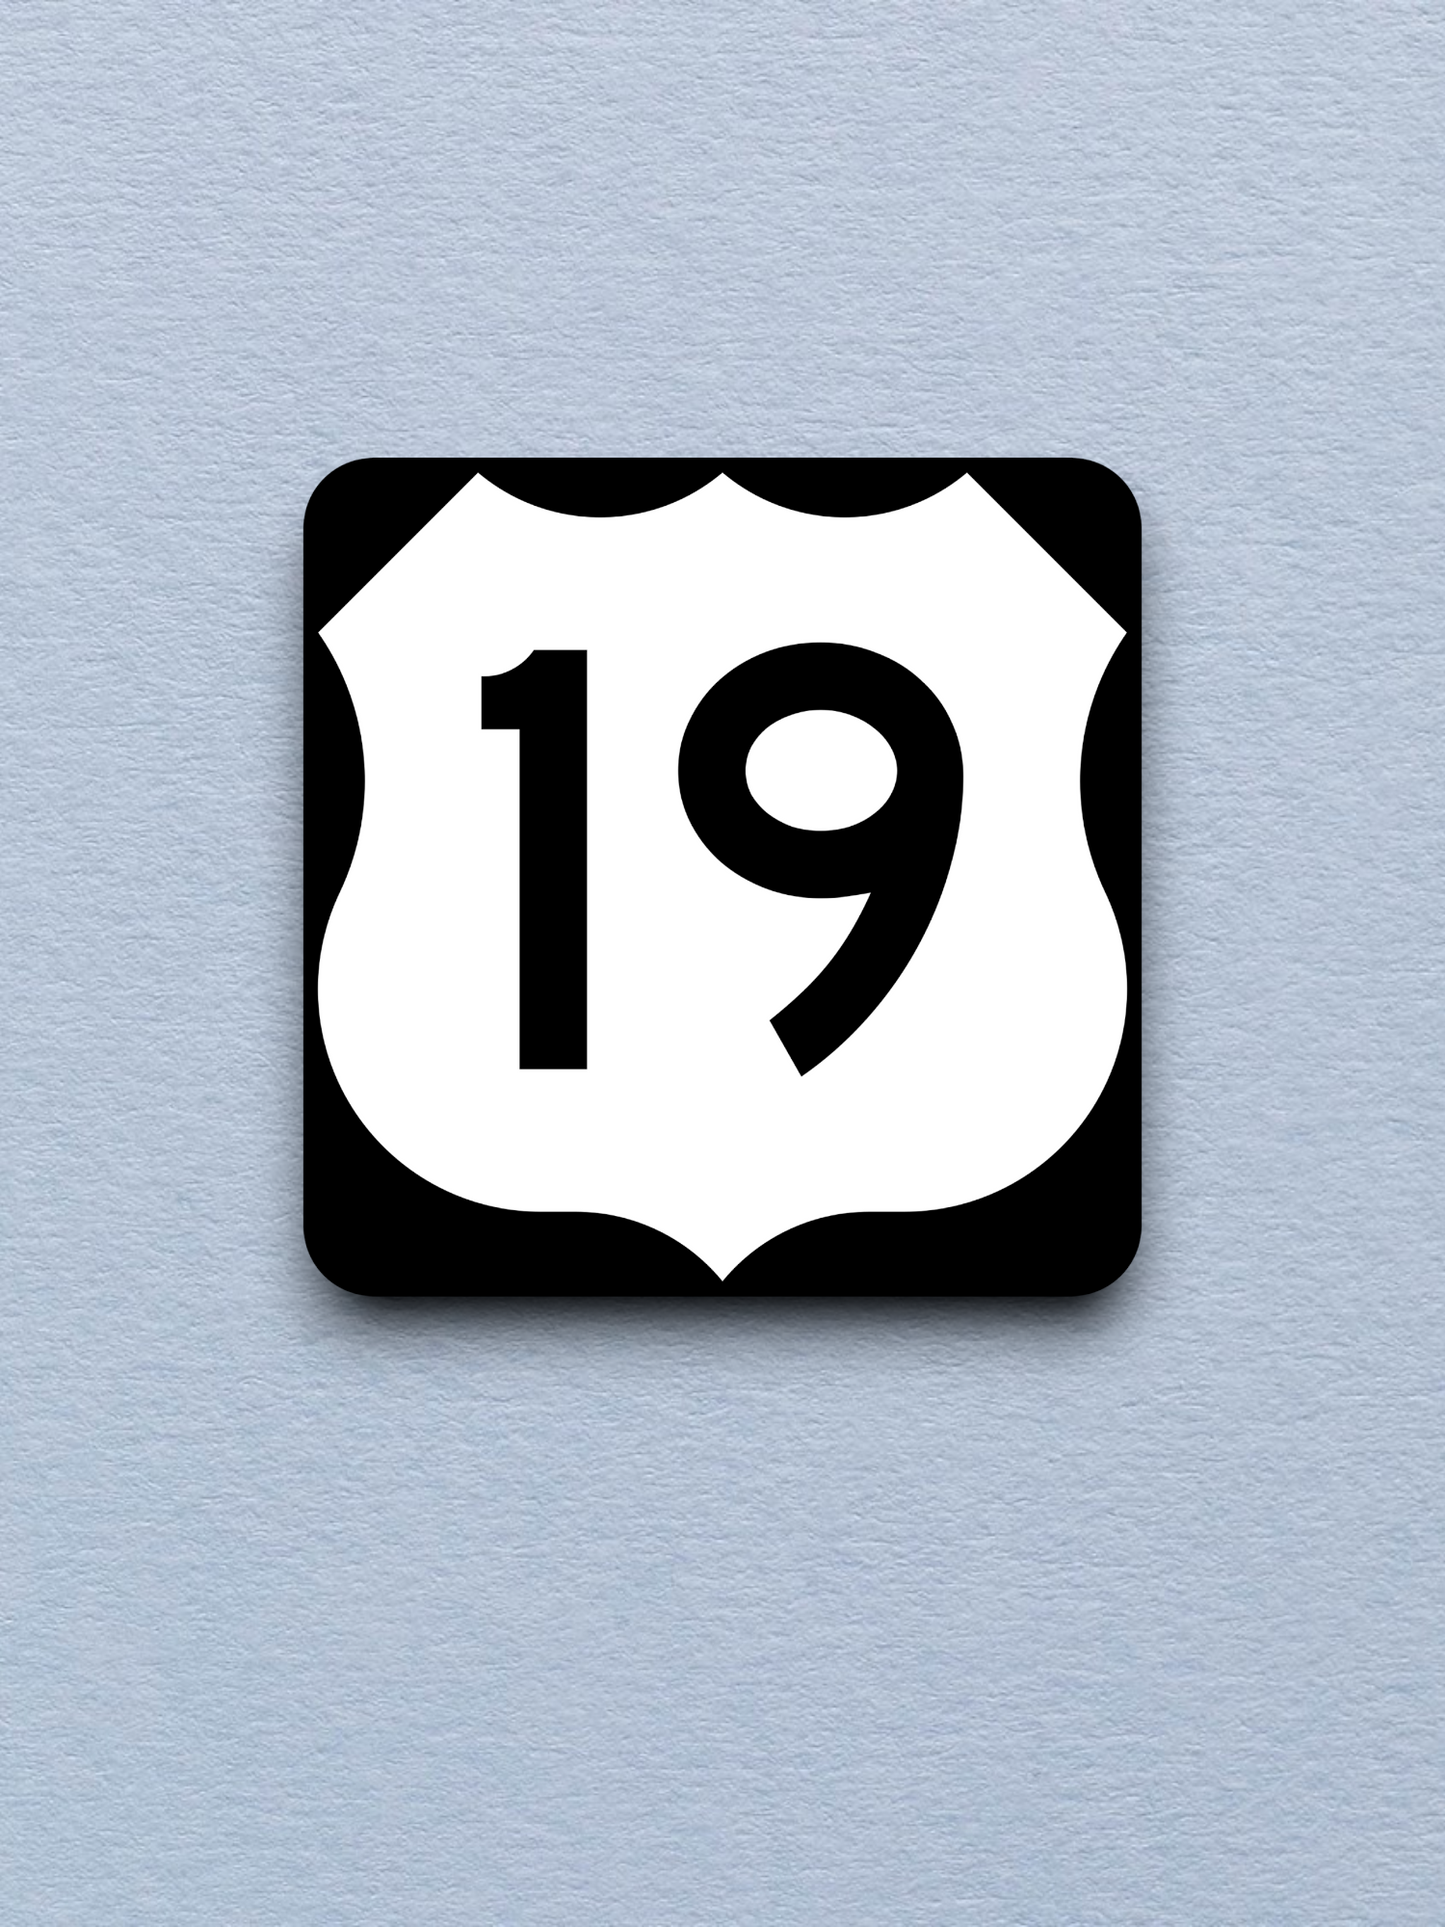 U.S. Route 19 Road Sign Sticker